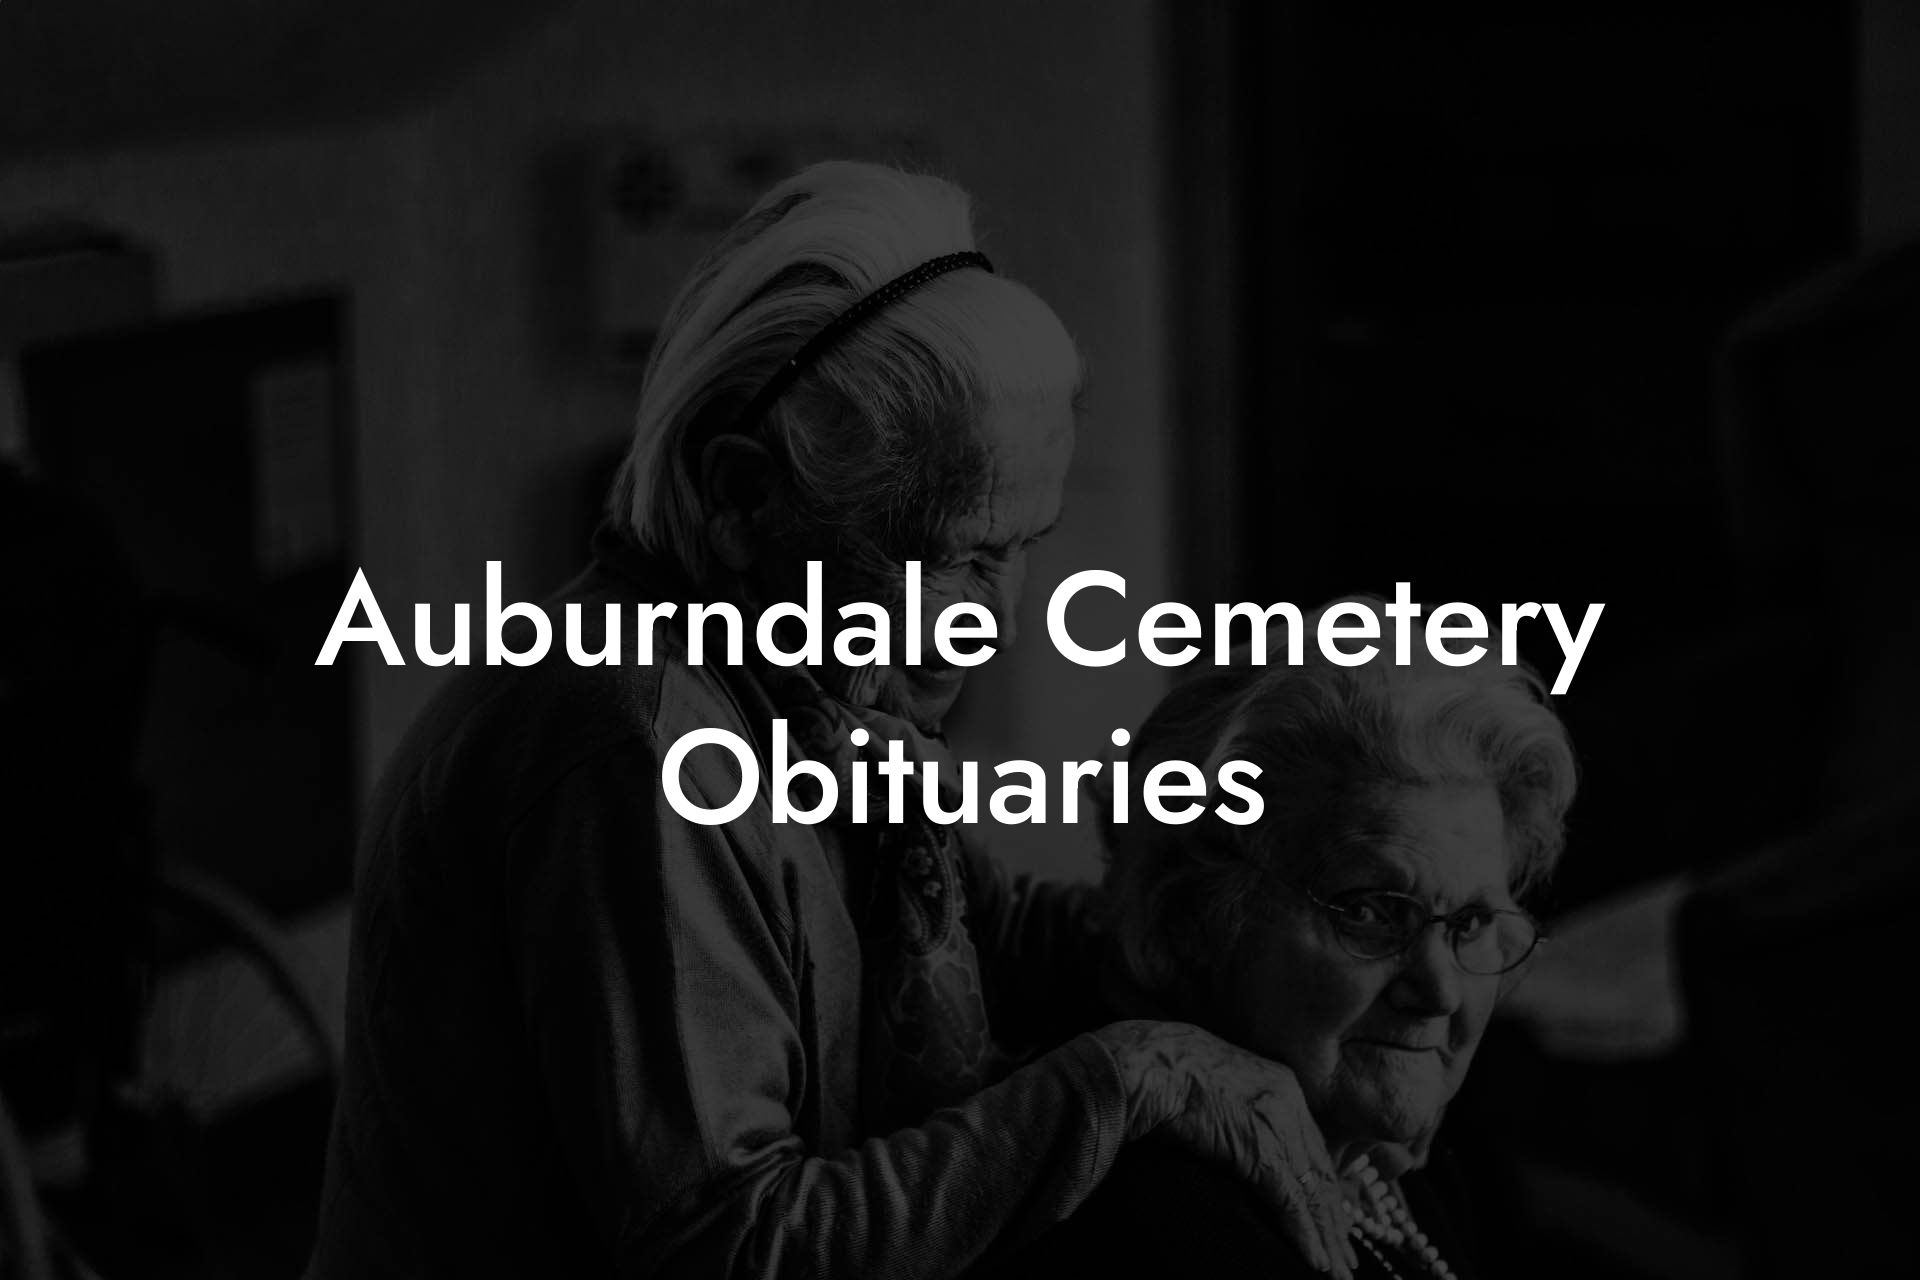 Auburndale Cemetery Obituaries